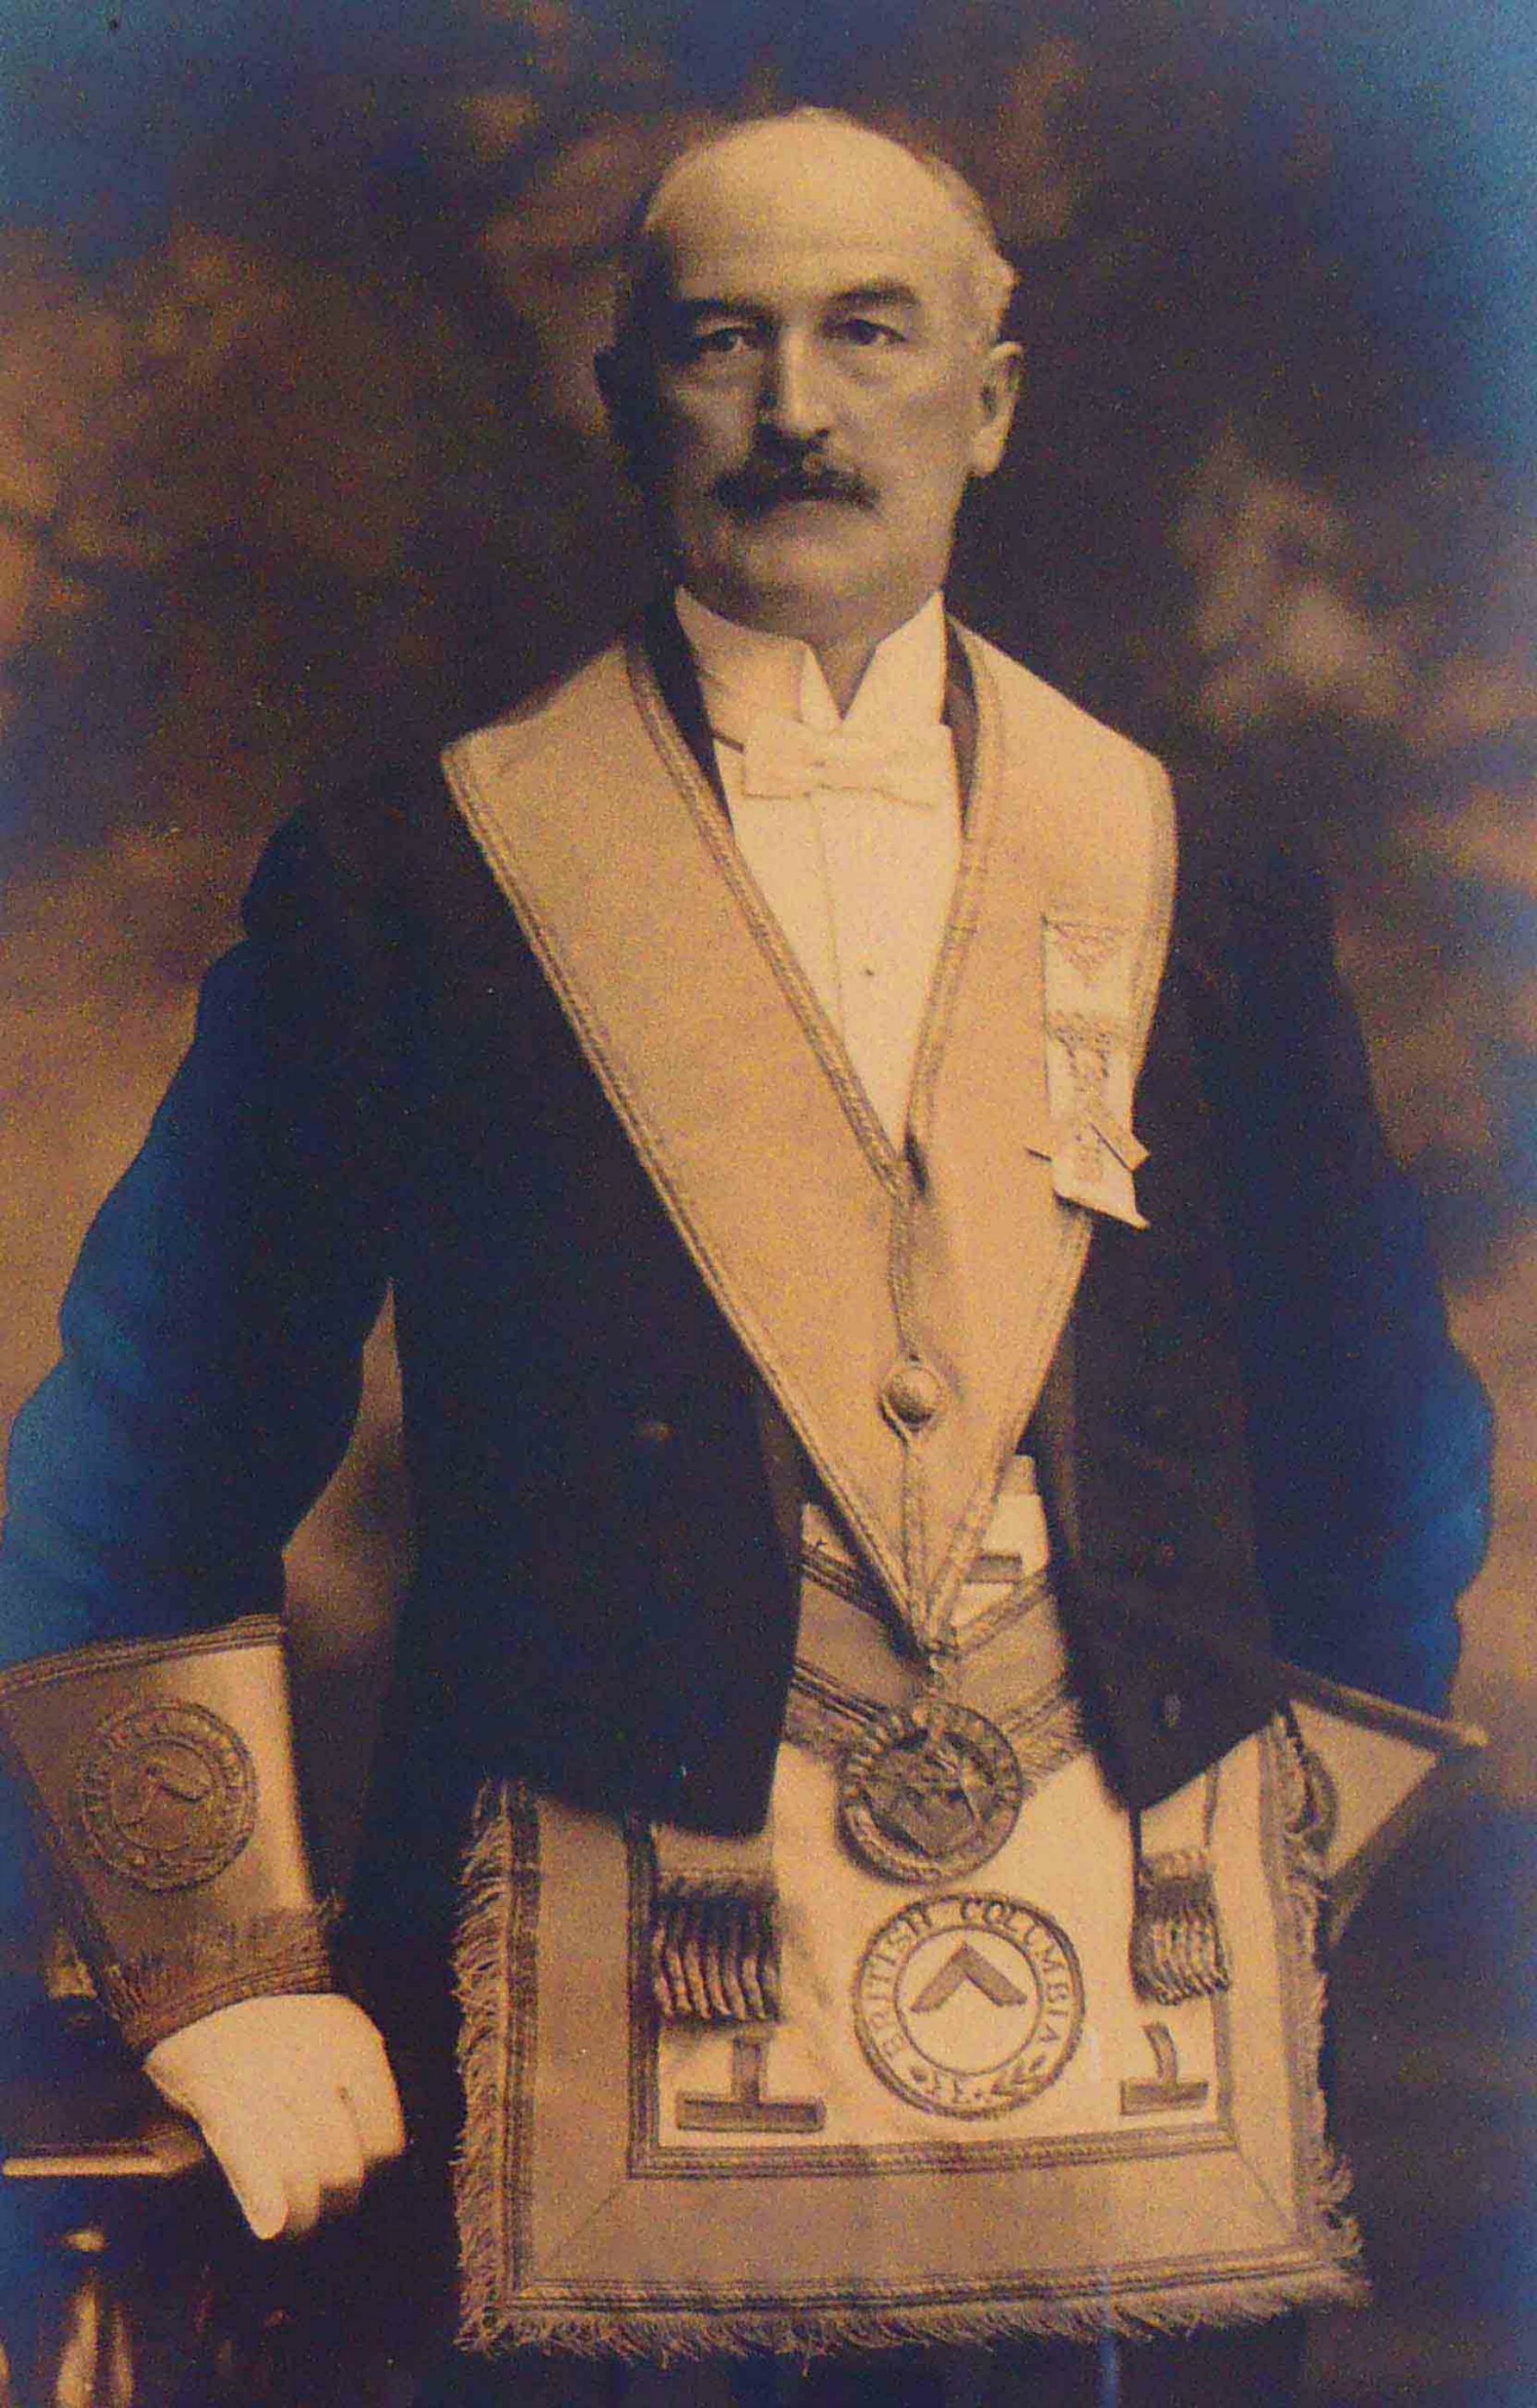 Thomas Pitt as District Deputy Grand Master, circa 1918